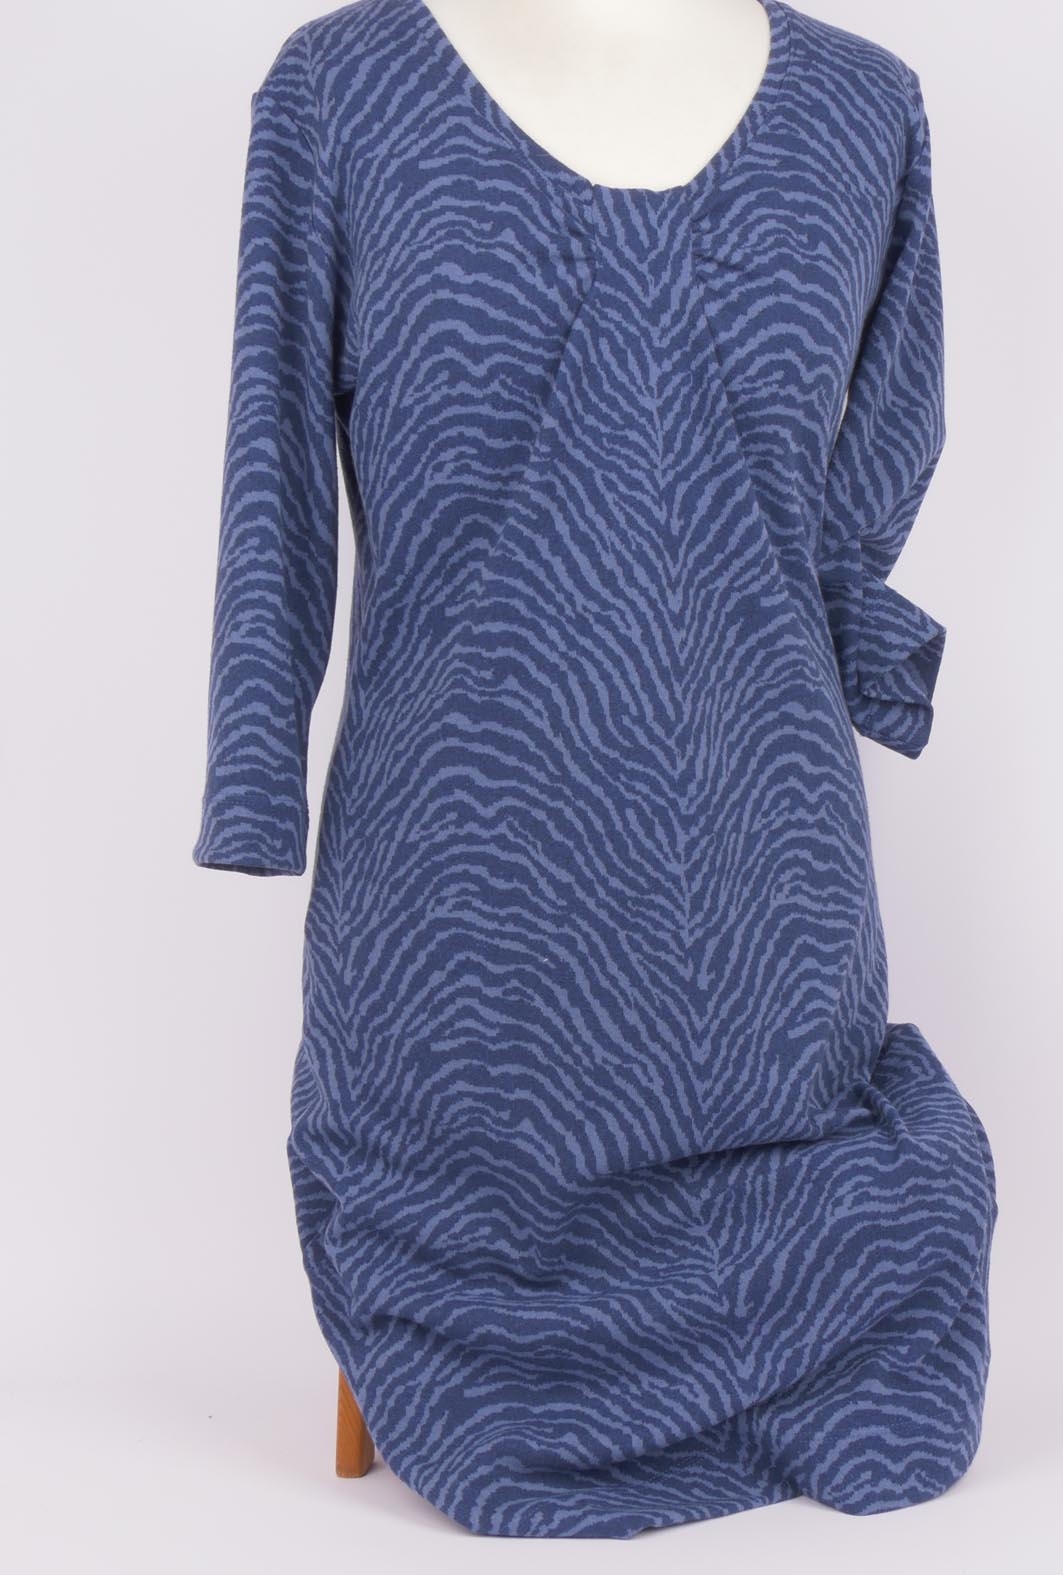 Nähpaket It`s a fits  Schnittmuster 1107 "Kleid Mia"mit recyeltem Ökostoff,blaues Zebramuster, Gr. 36 - 44